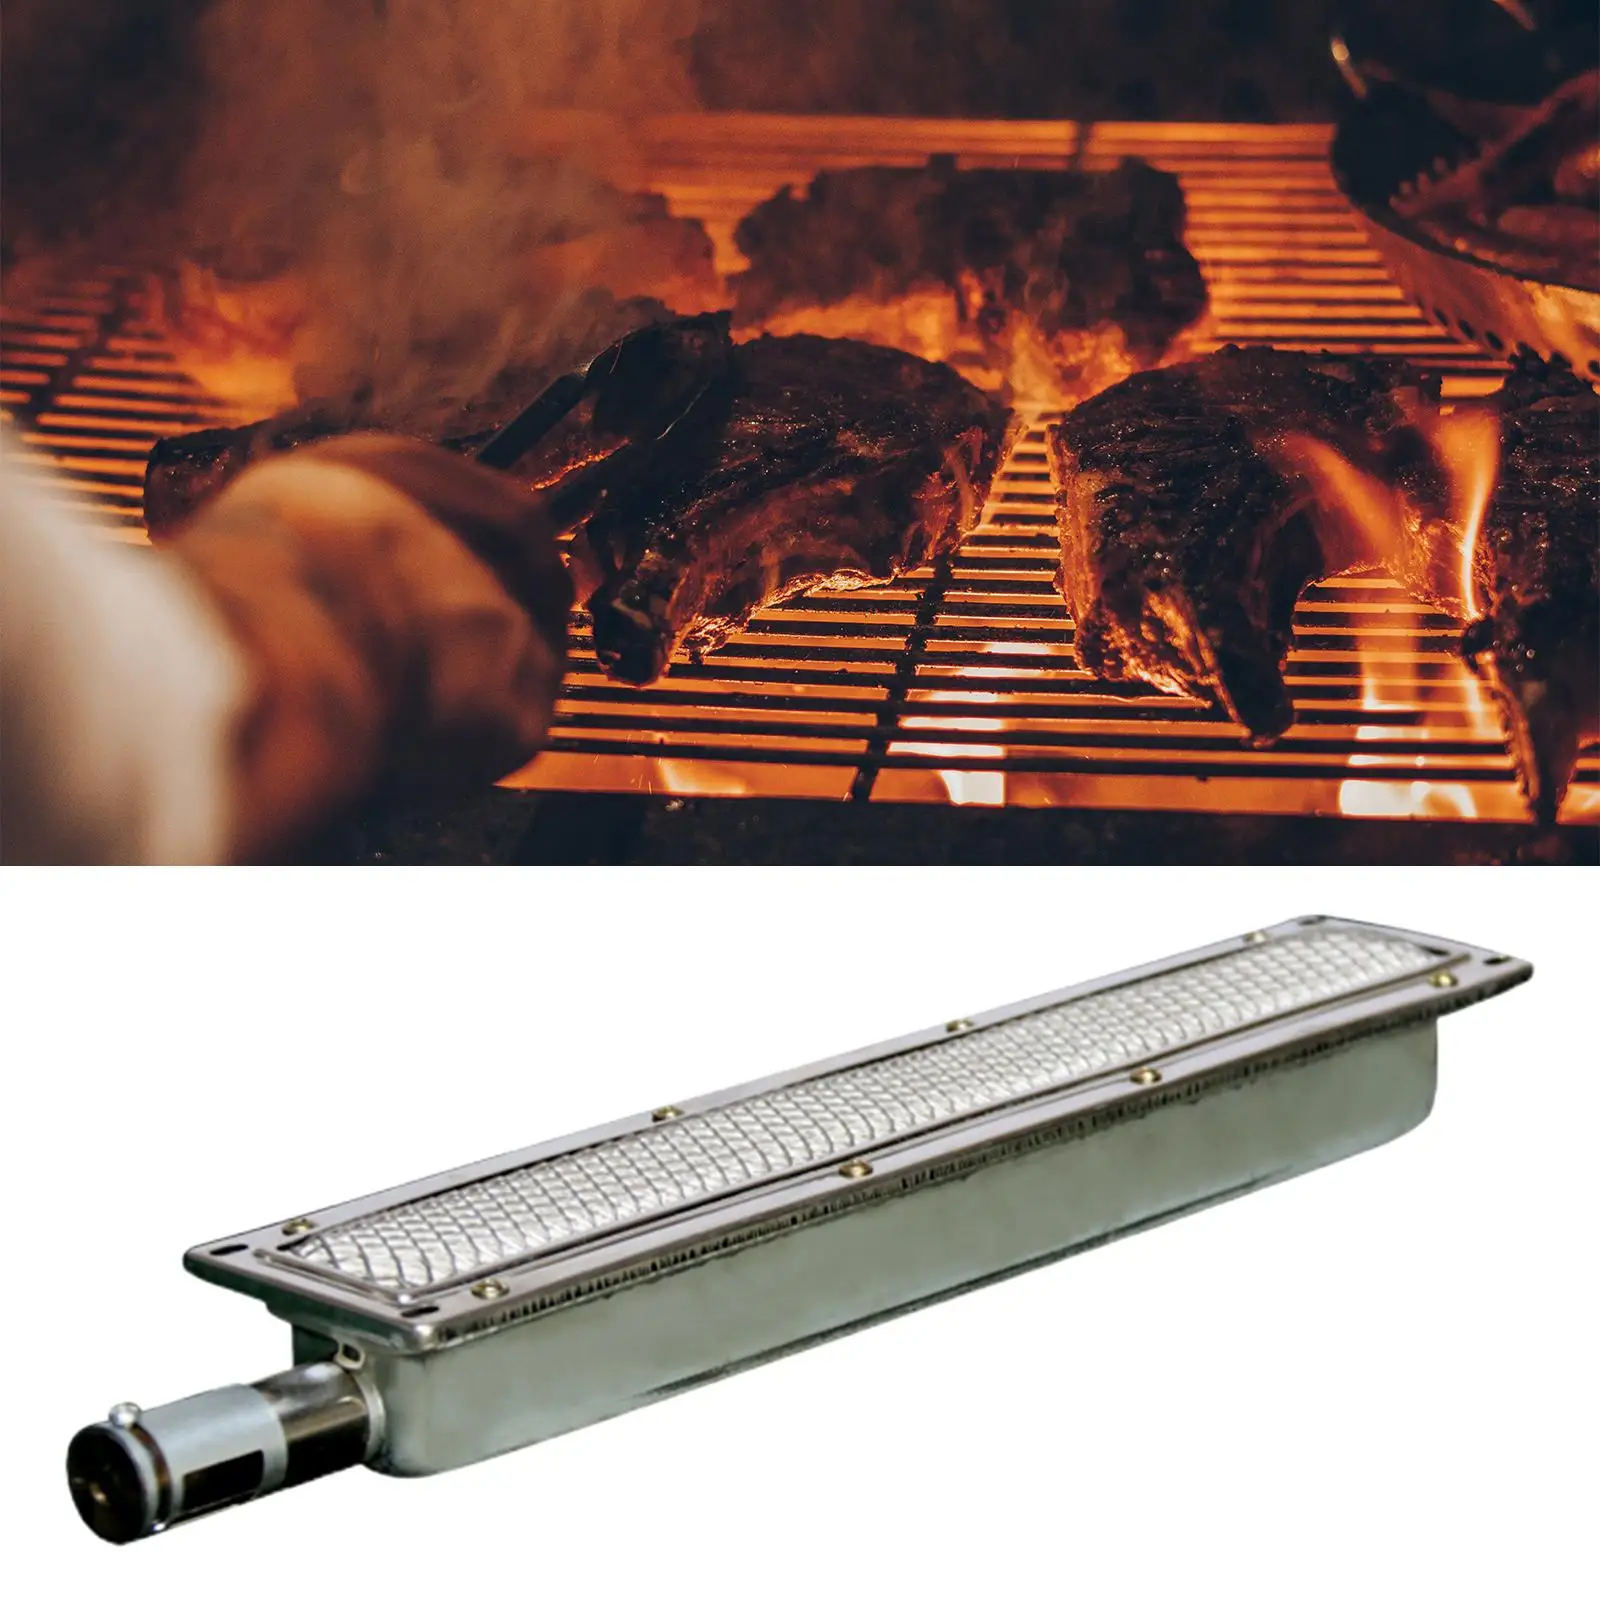 Heater Burner Burner for Barbecues Grill Infrared Heater 